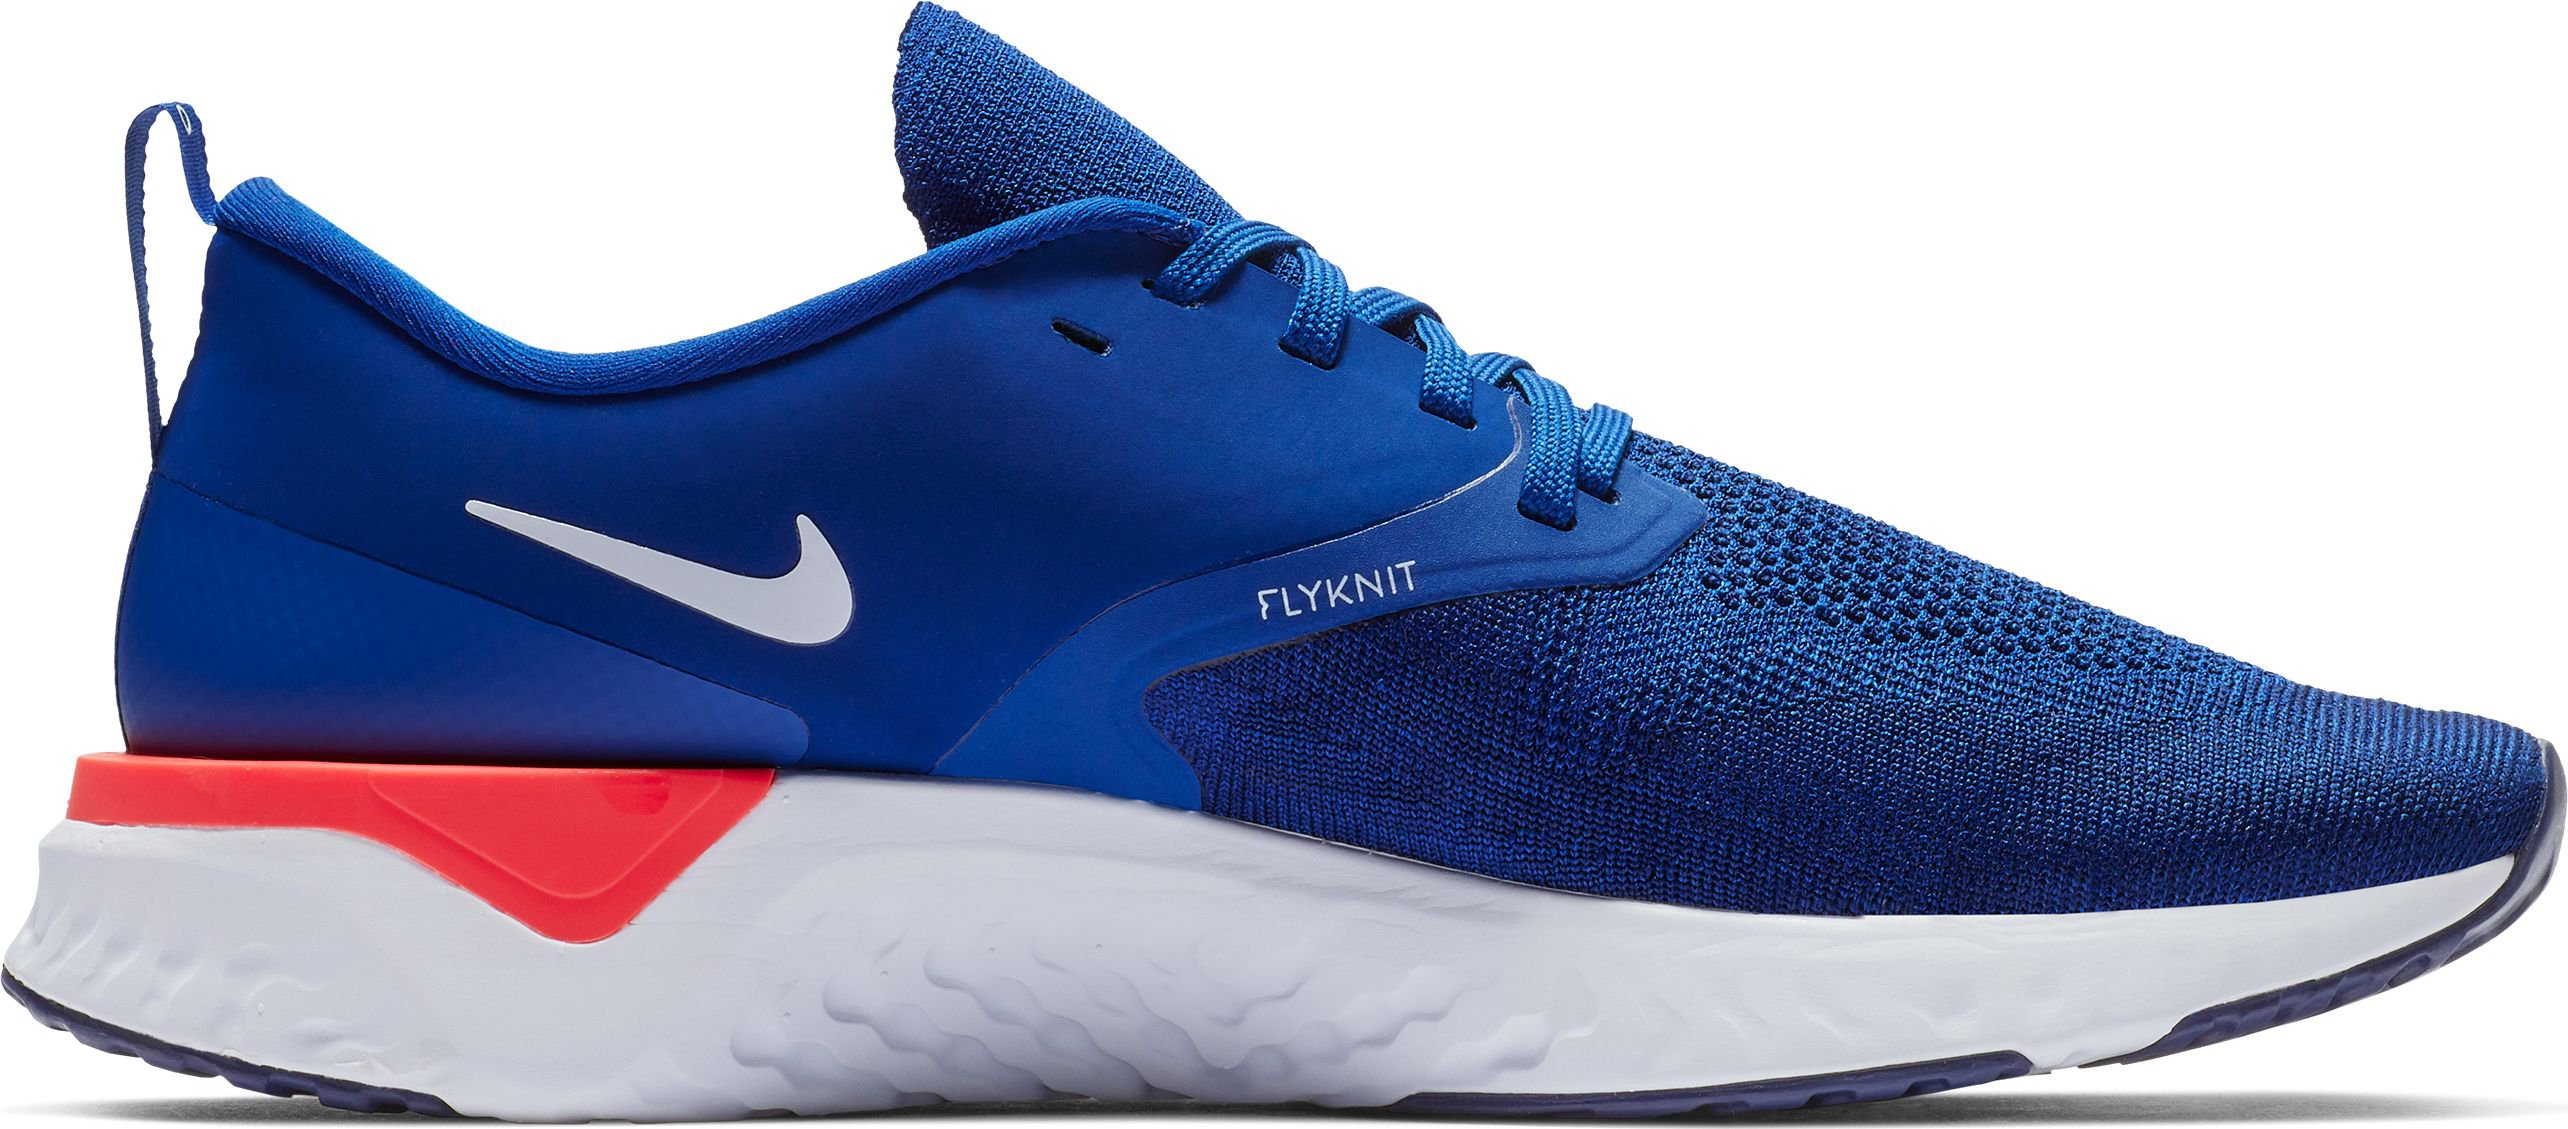 Nike obuv ODDYSSEY REACT 2 force/blue Velikost: 8